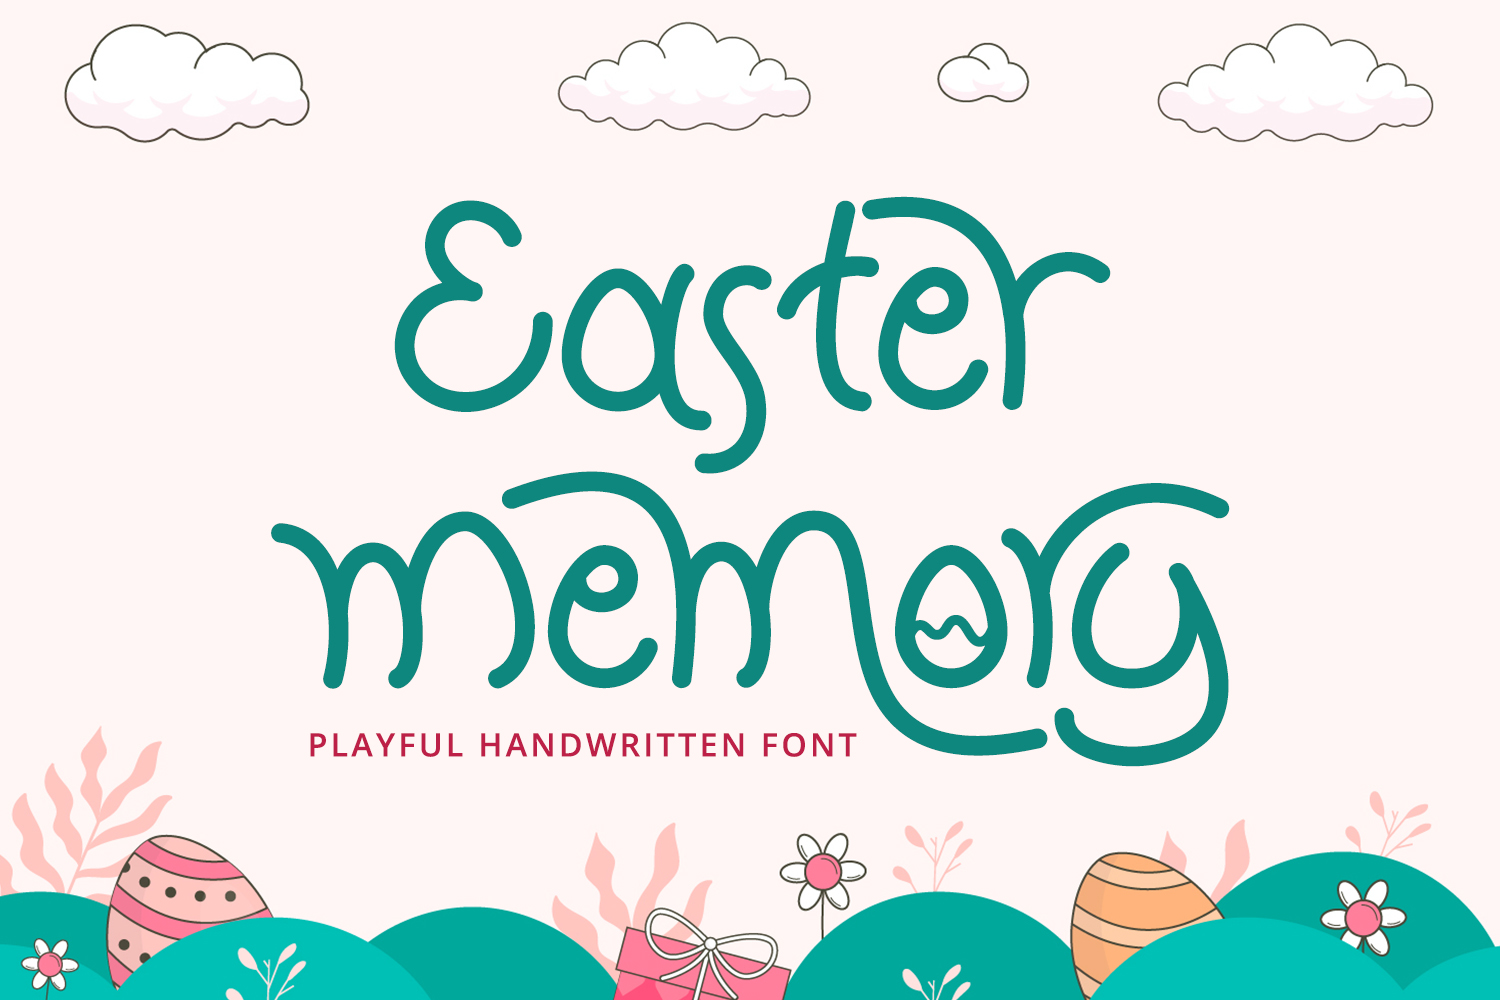 Easter Memory Handwritten Font